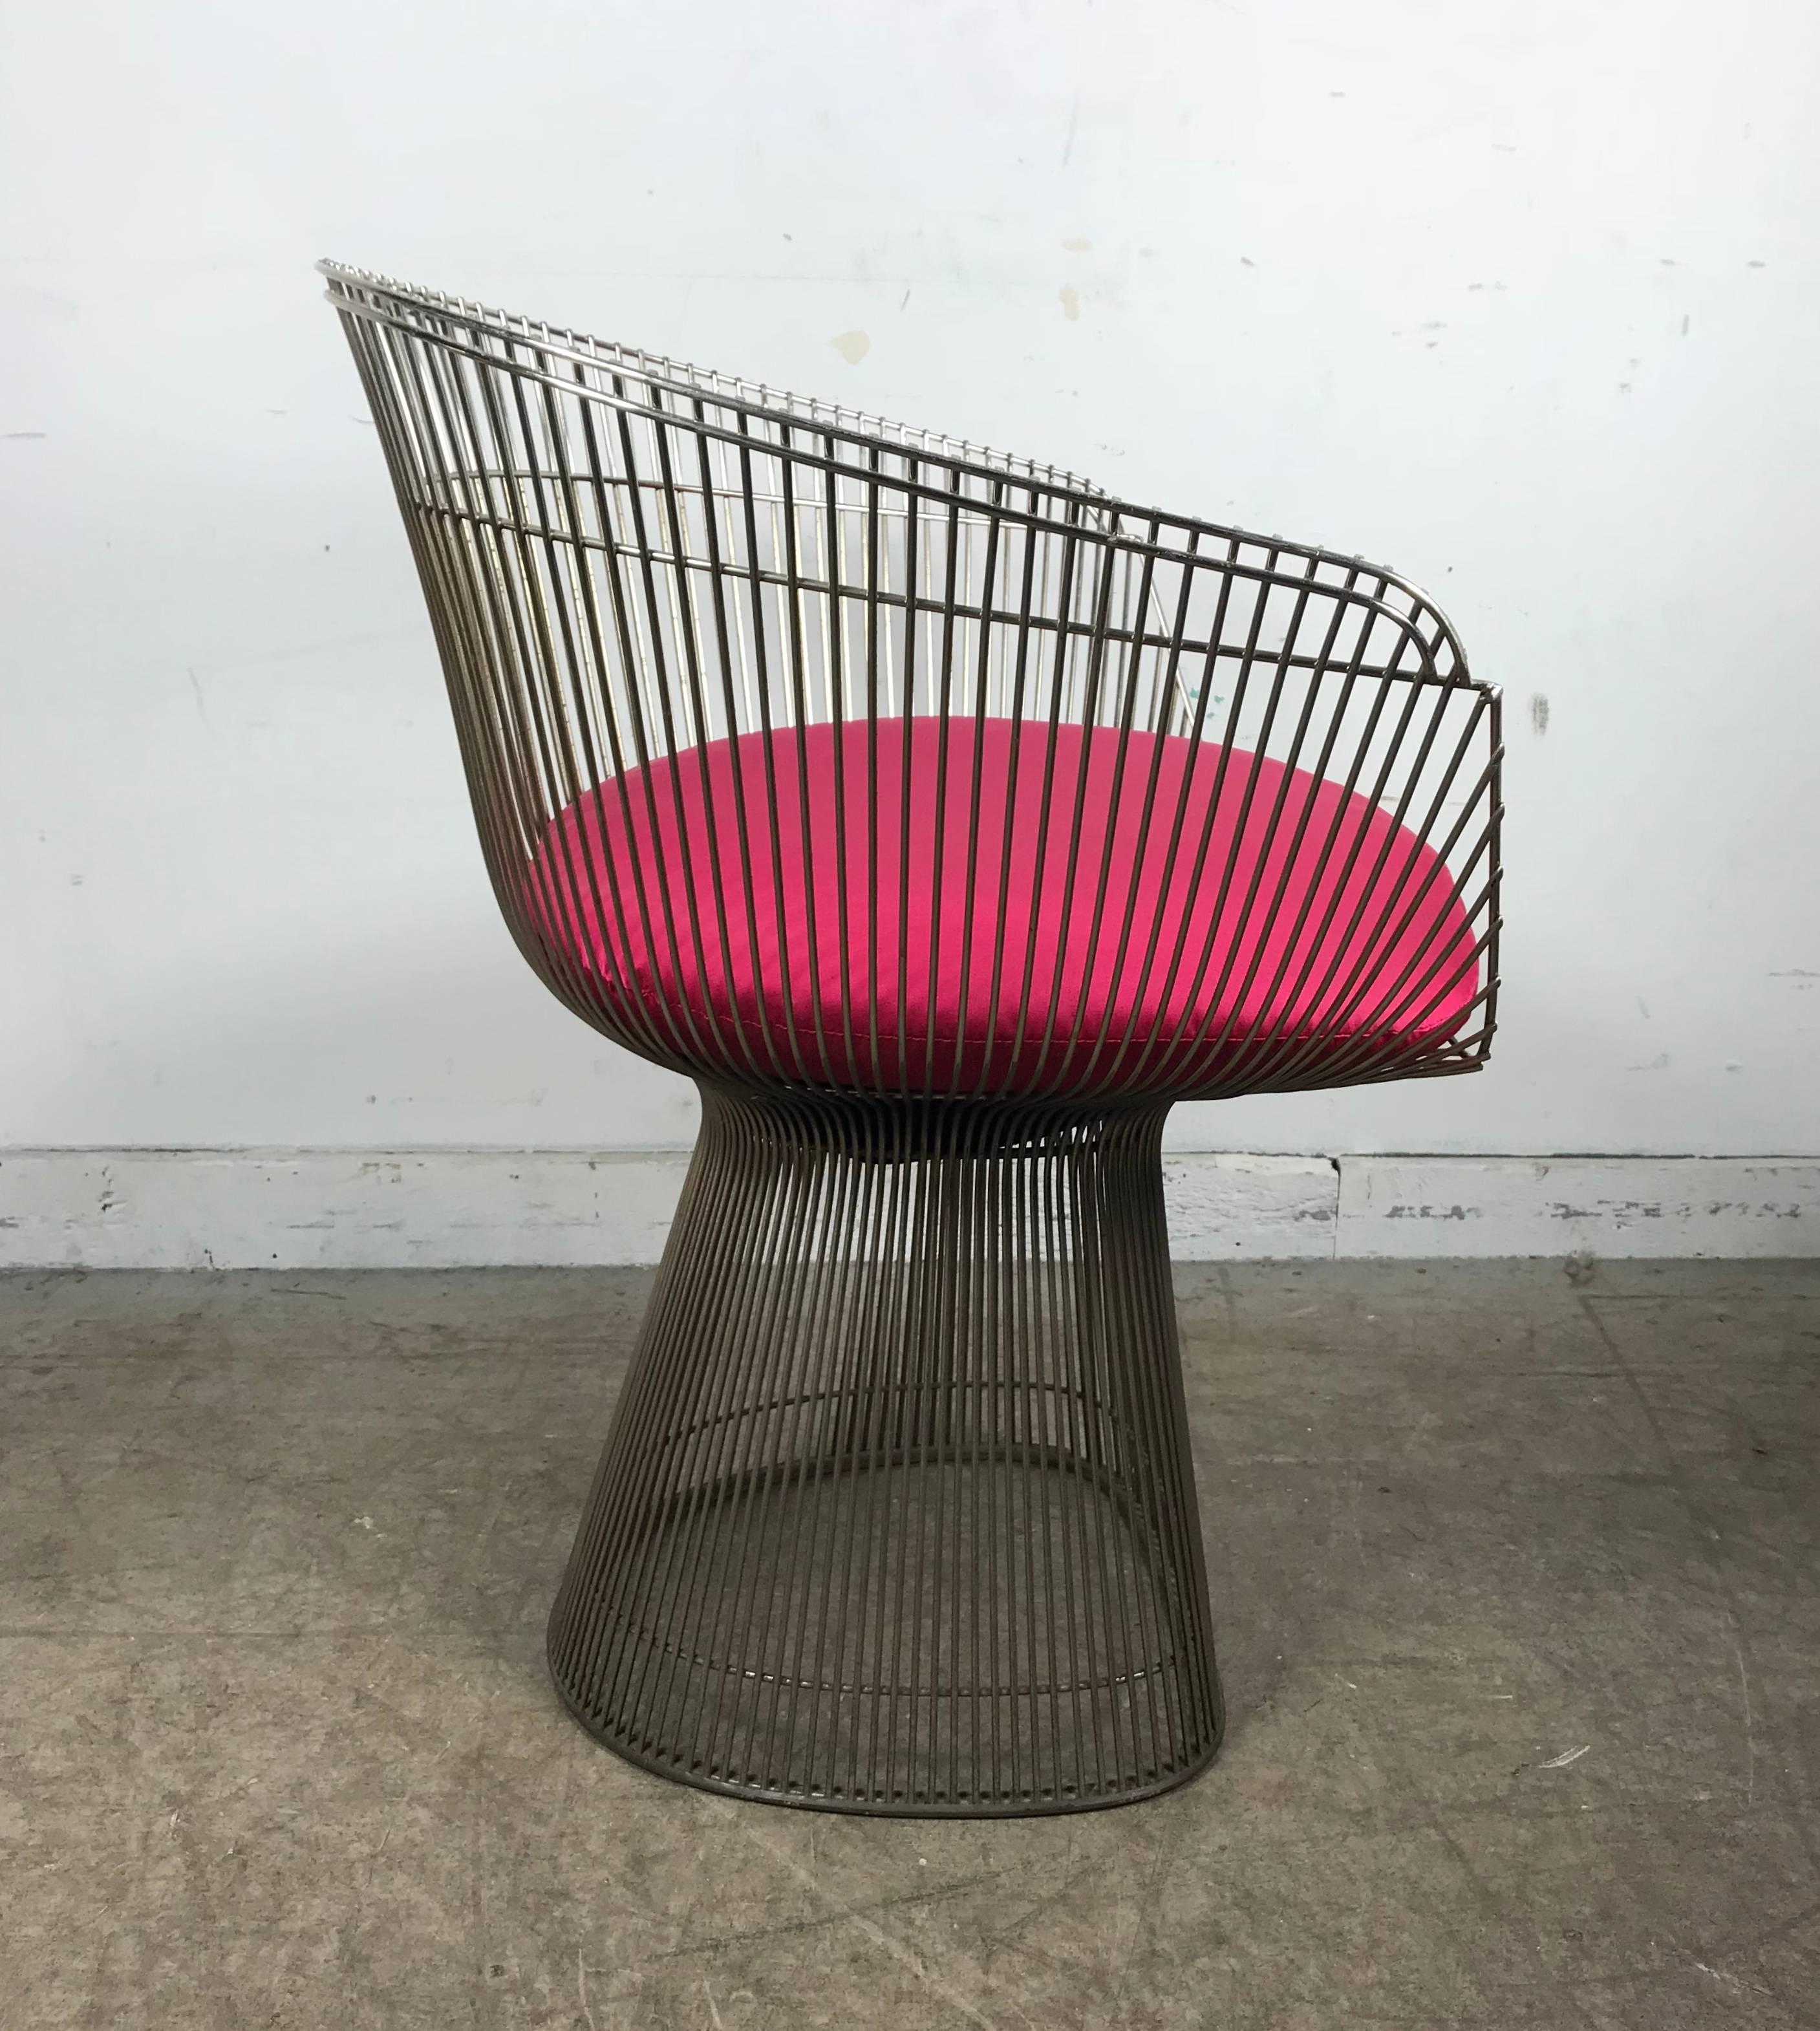 Modernist armchair by Warren Platner for Knoll, missing back wrap armrest, retains original early Knoll label.